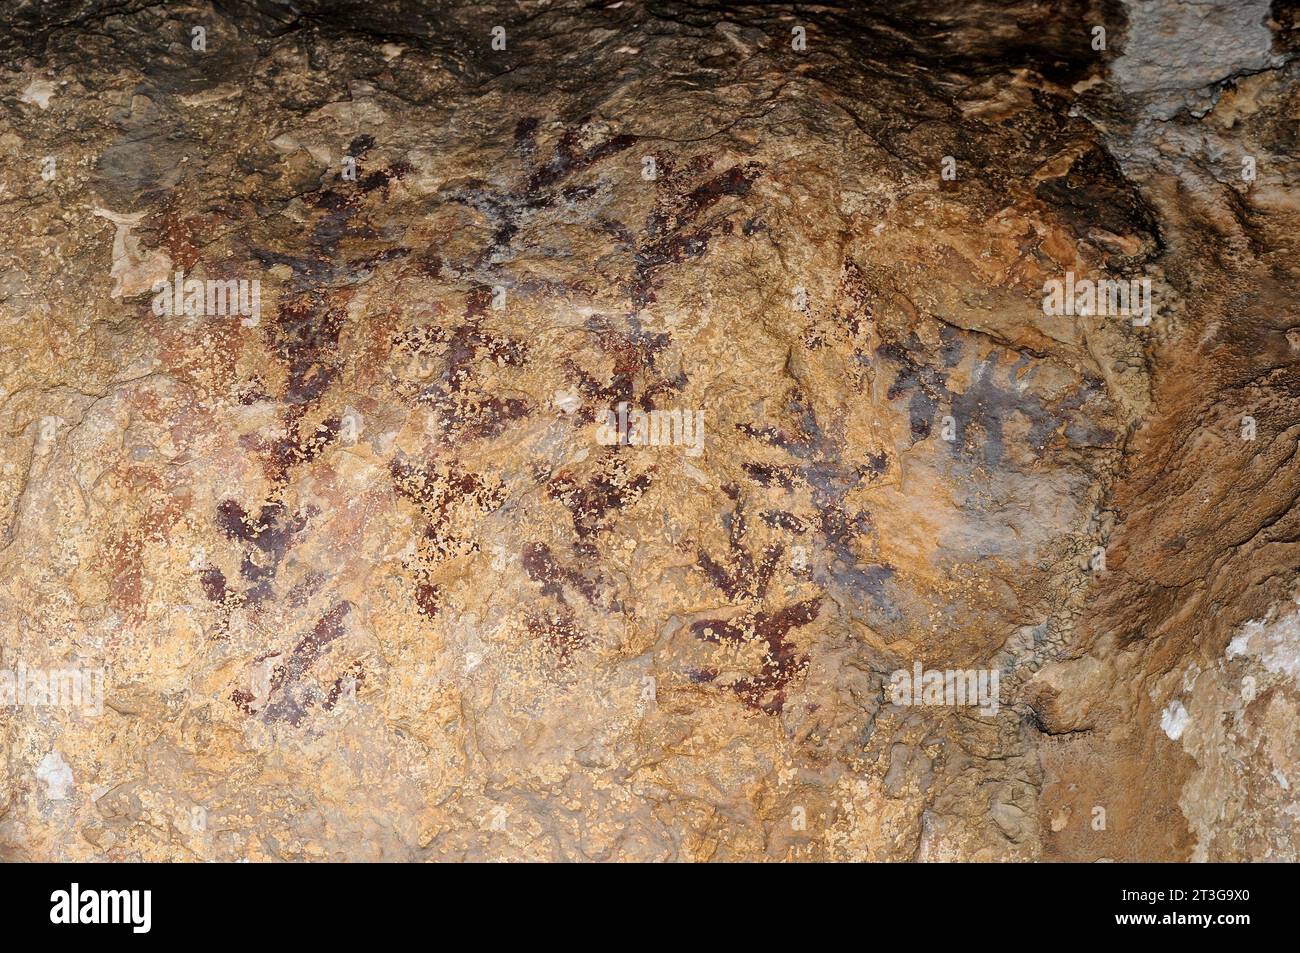 Tozal de Mallata, cave paintings. Asque, Colungo municipality, Sierra y Cañones de Guara Natural Park, Huesca province, Aragon, Spain. Stock Photo